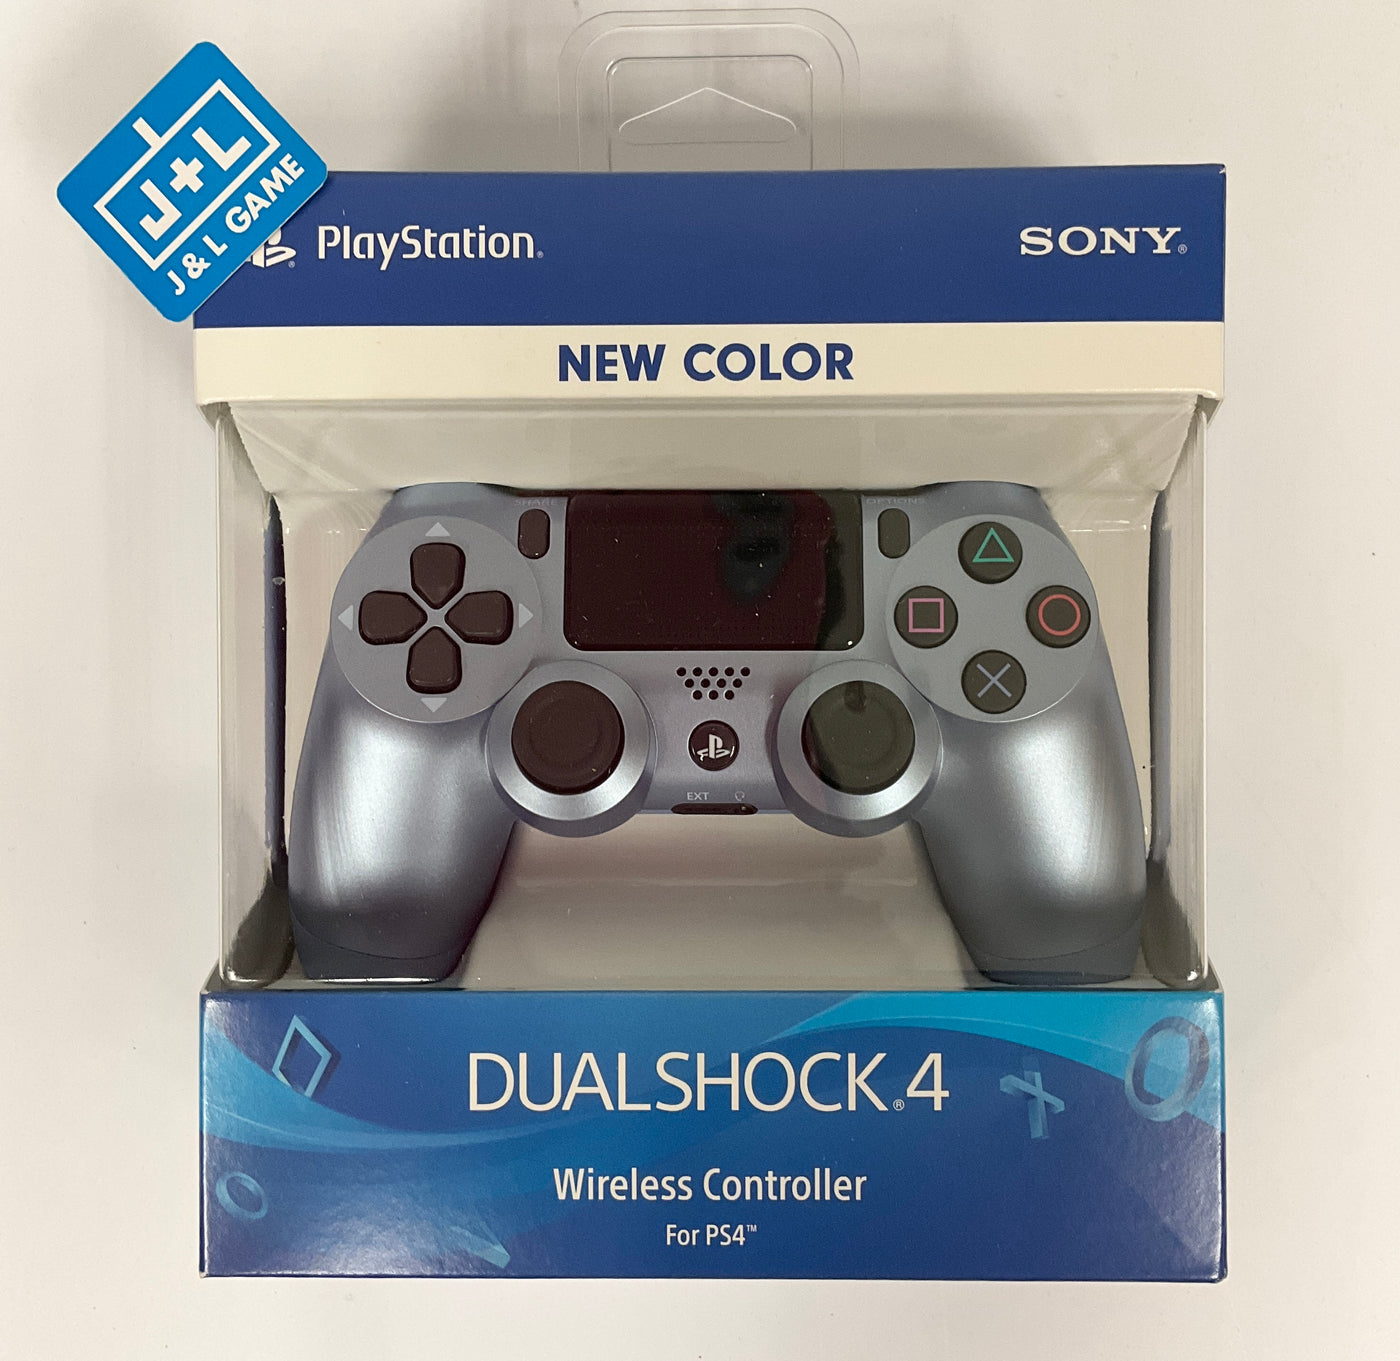 Sony DualShock 4 Wireless Controller | PlayStati Blue) J&L (Titanium - (PS4) Game